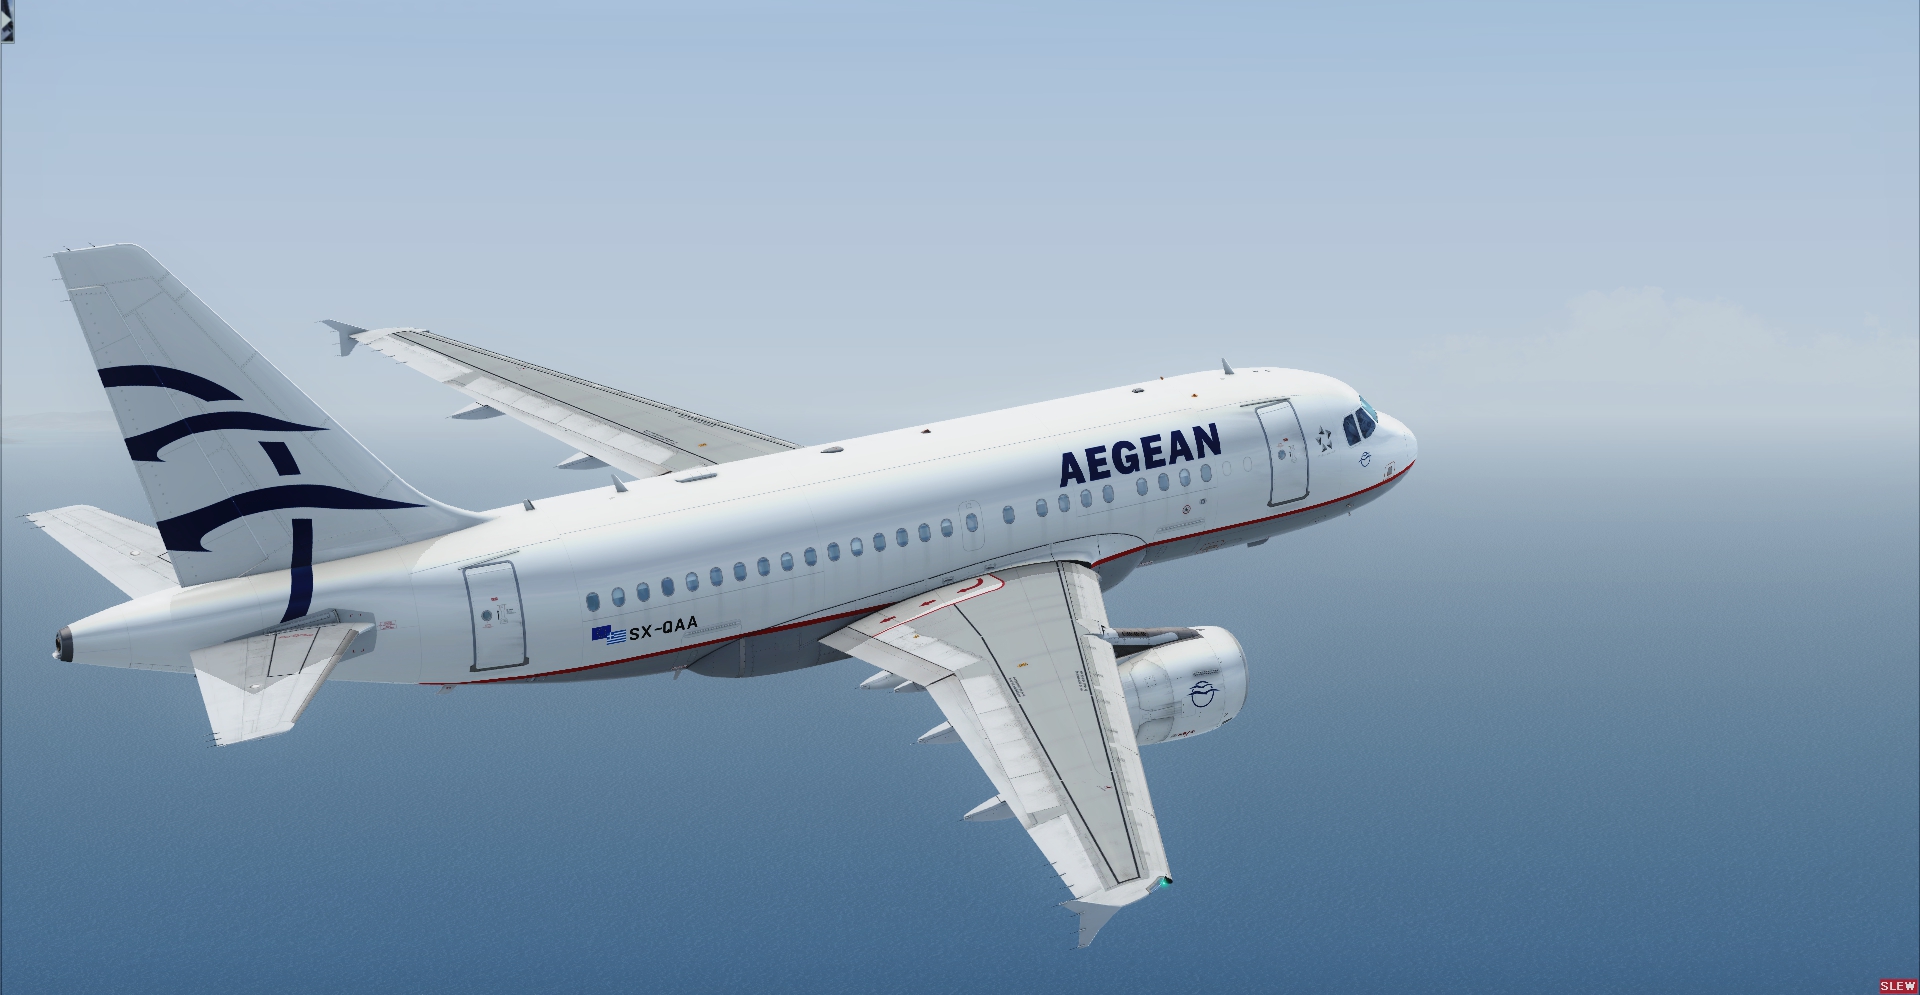 More information about "A318 CFM Aegean SX-QAA"